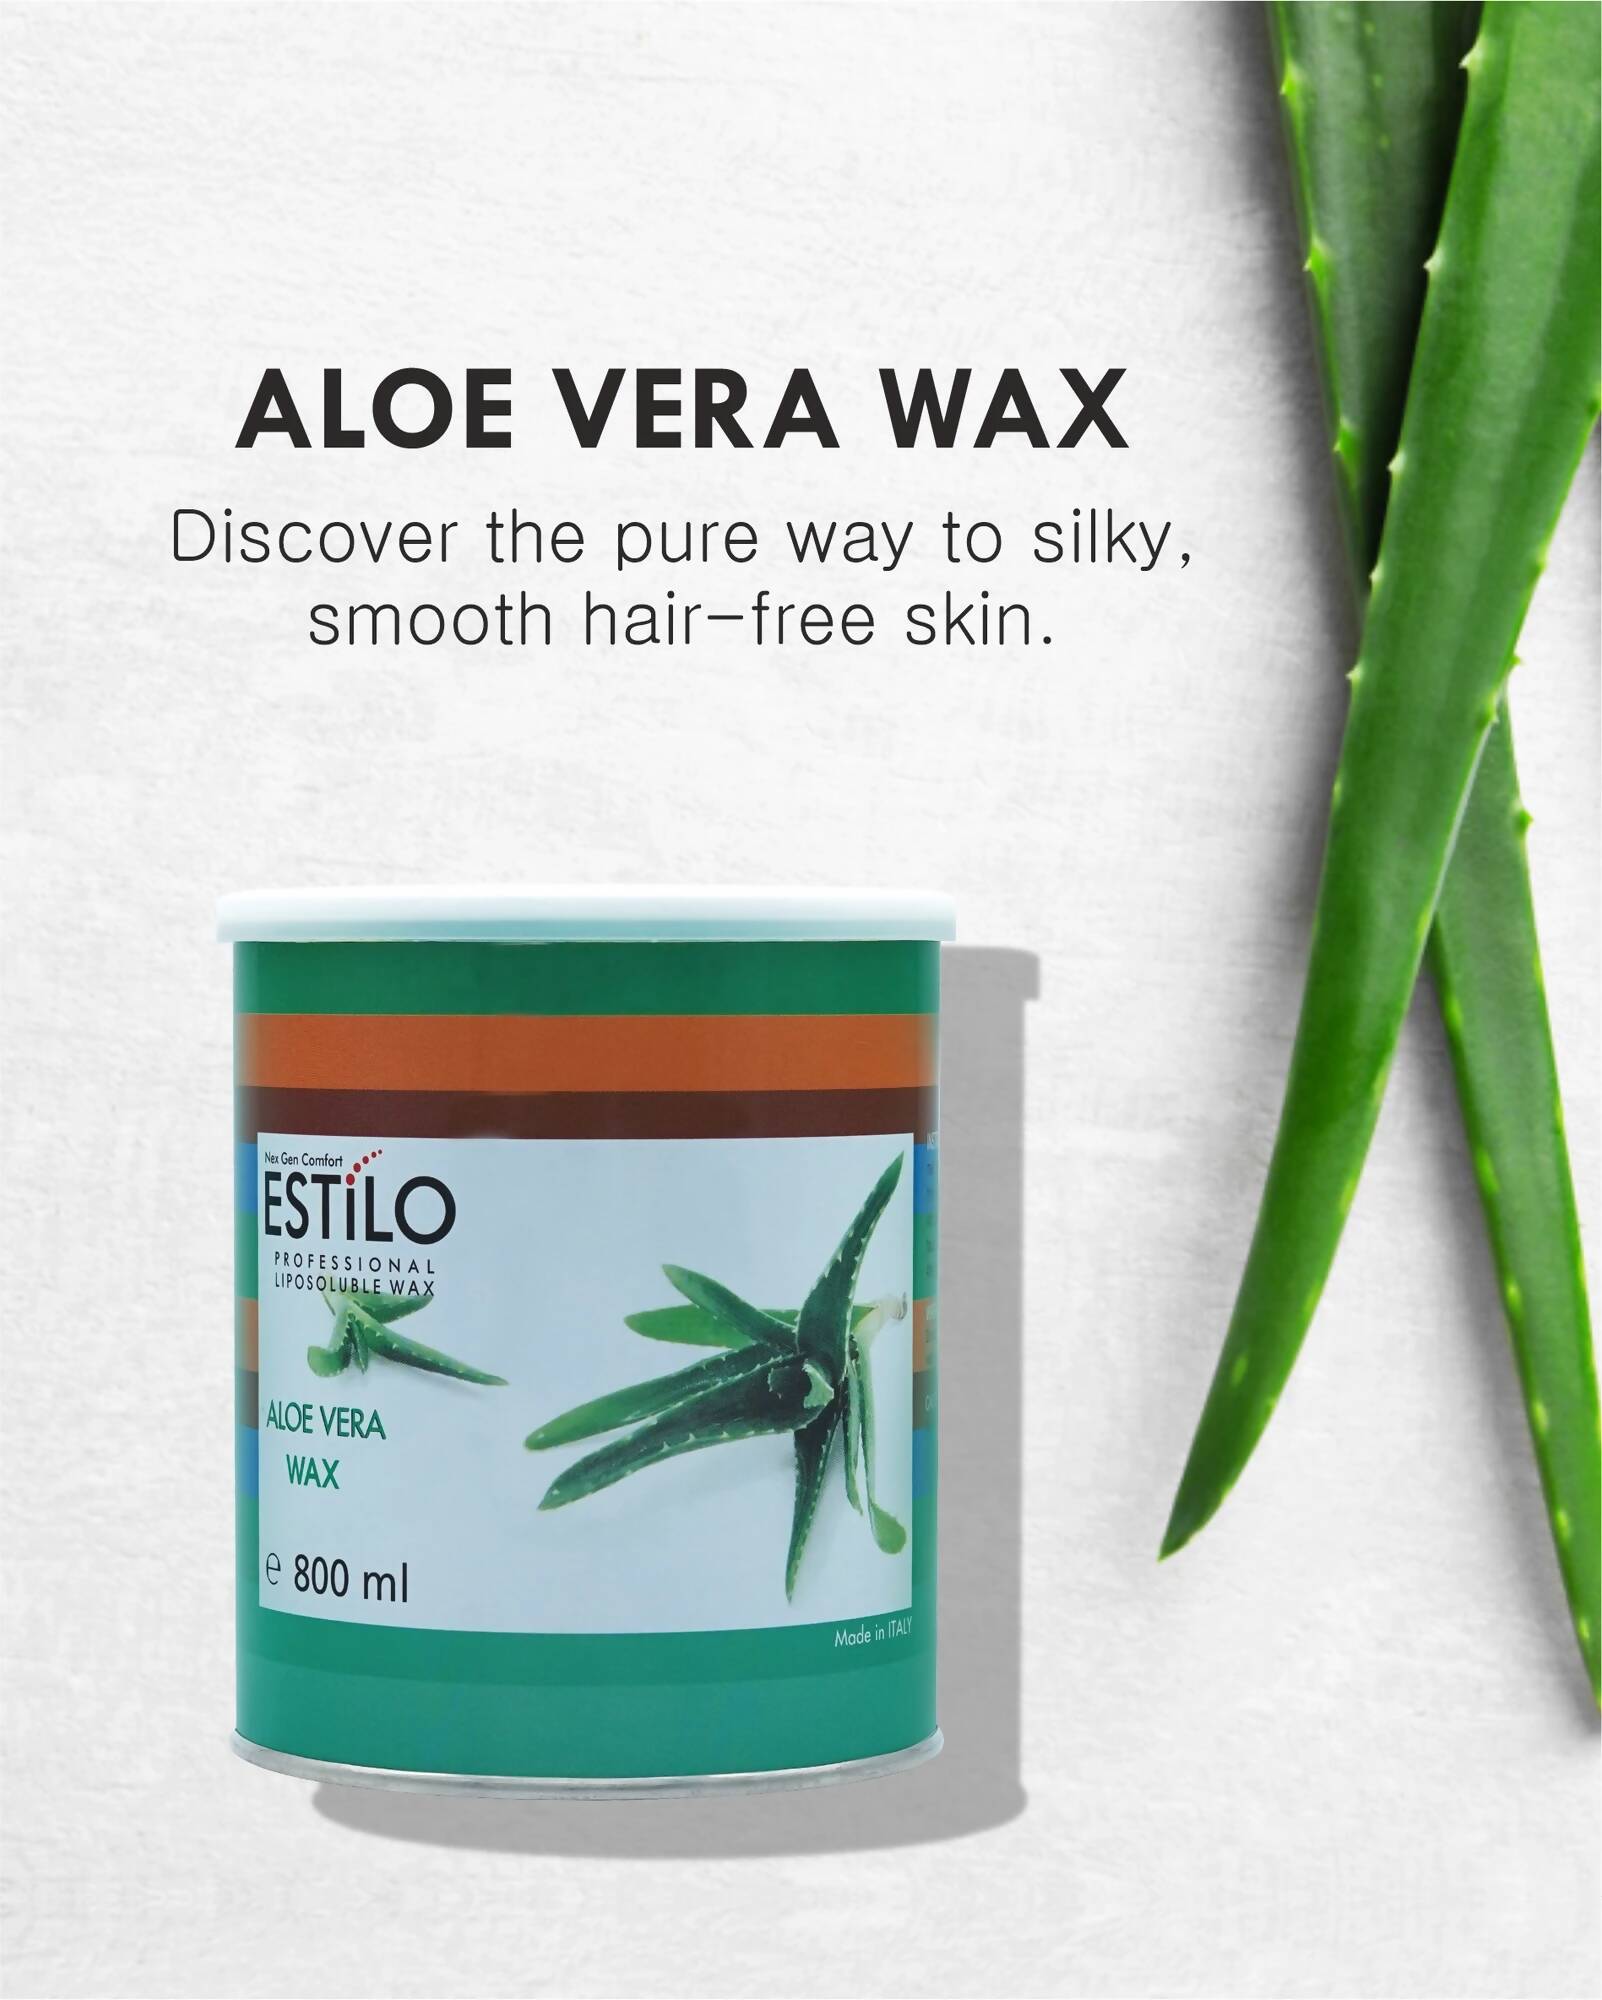 benefits of aloe vera wax